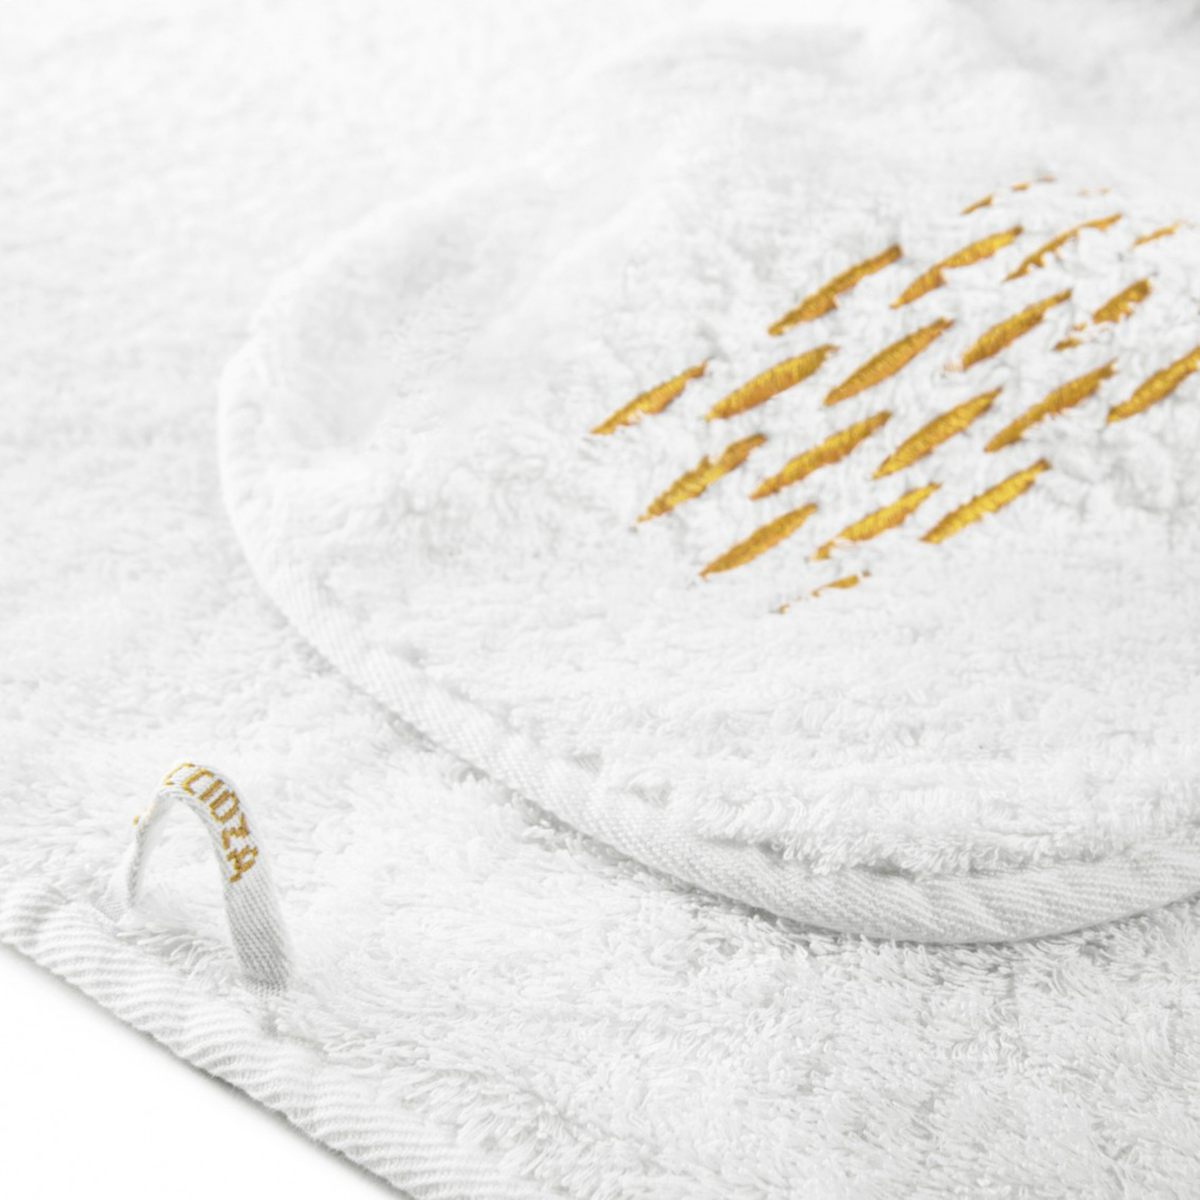 Graccioza Alhambra Bath Towel Closeup of White Gold Color and Hanging Loop